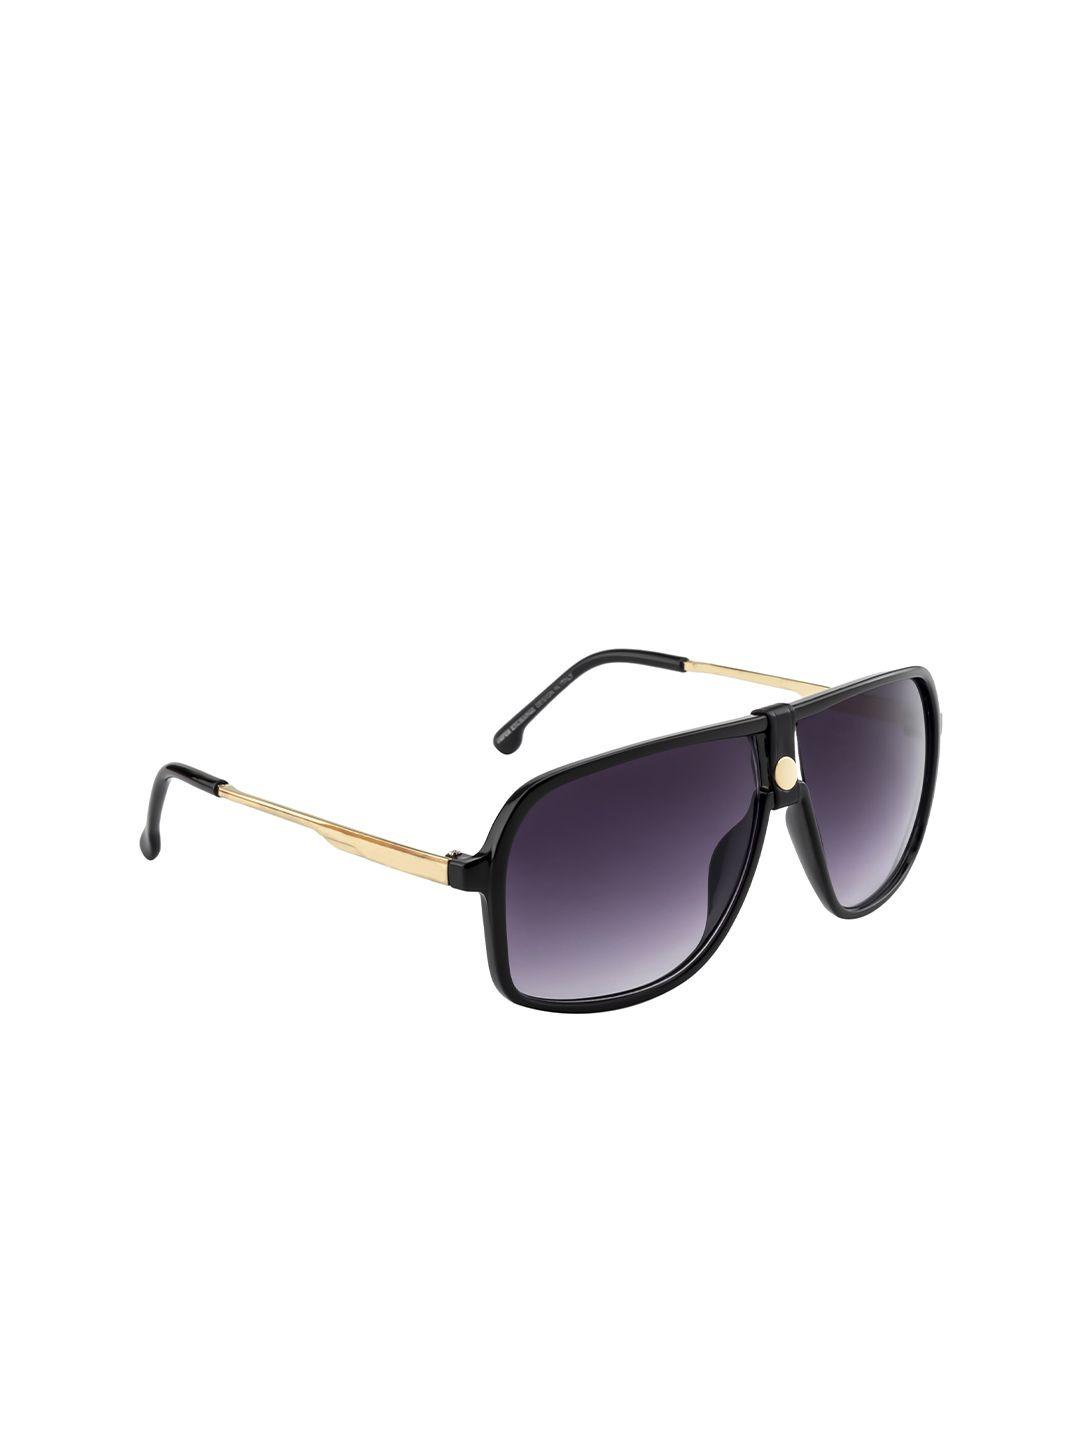 mast-&-harbour-full-rim-square-sunglasses-with-uv-protected-lens-mh-m25113